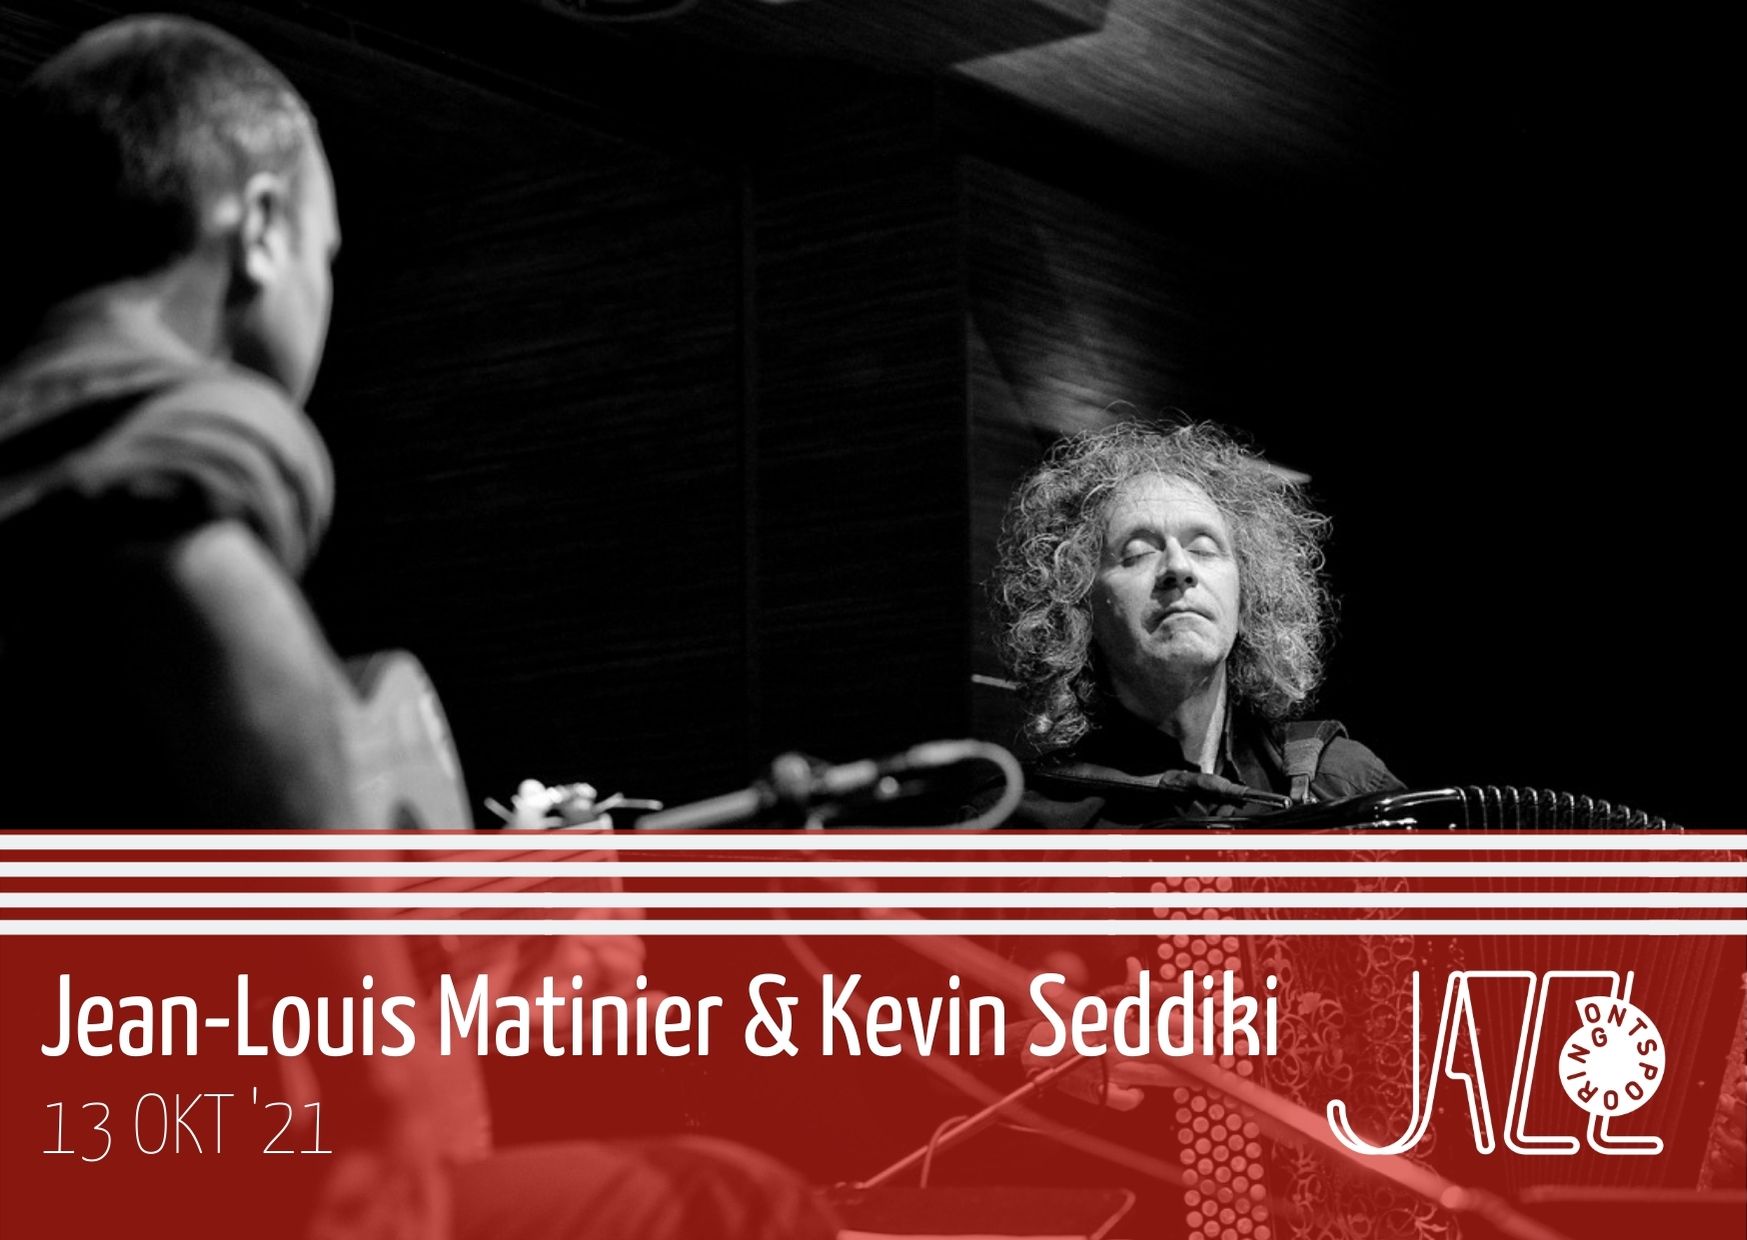 Jean-Louis Matinier & Kevin Seddiki 